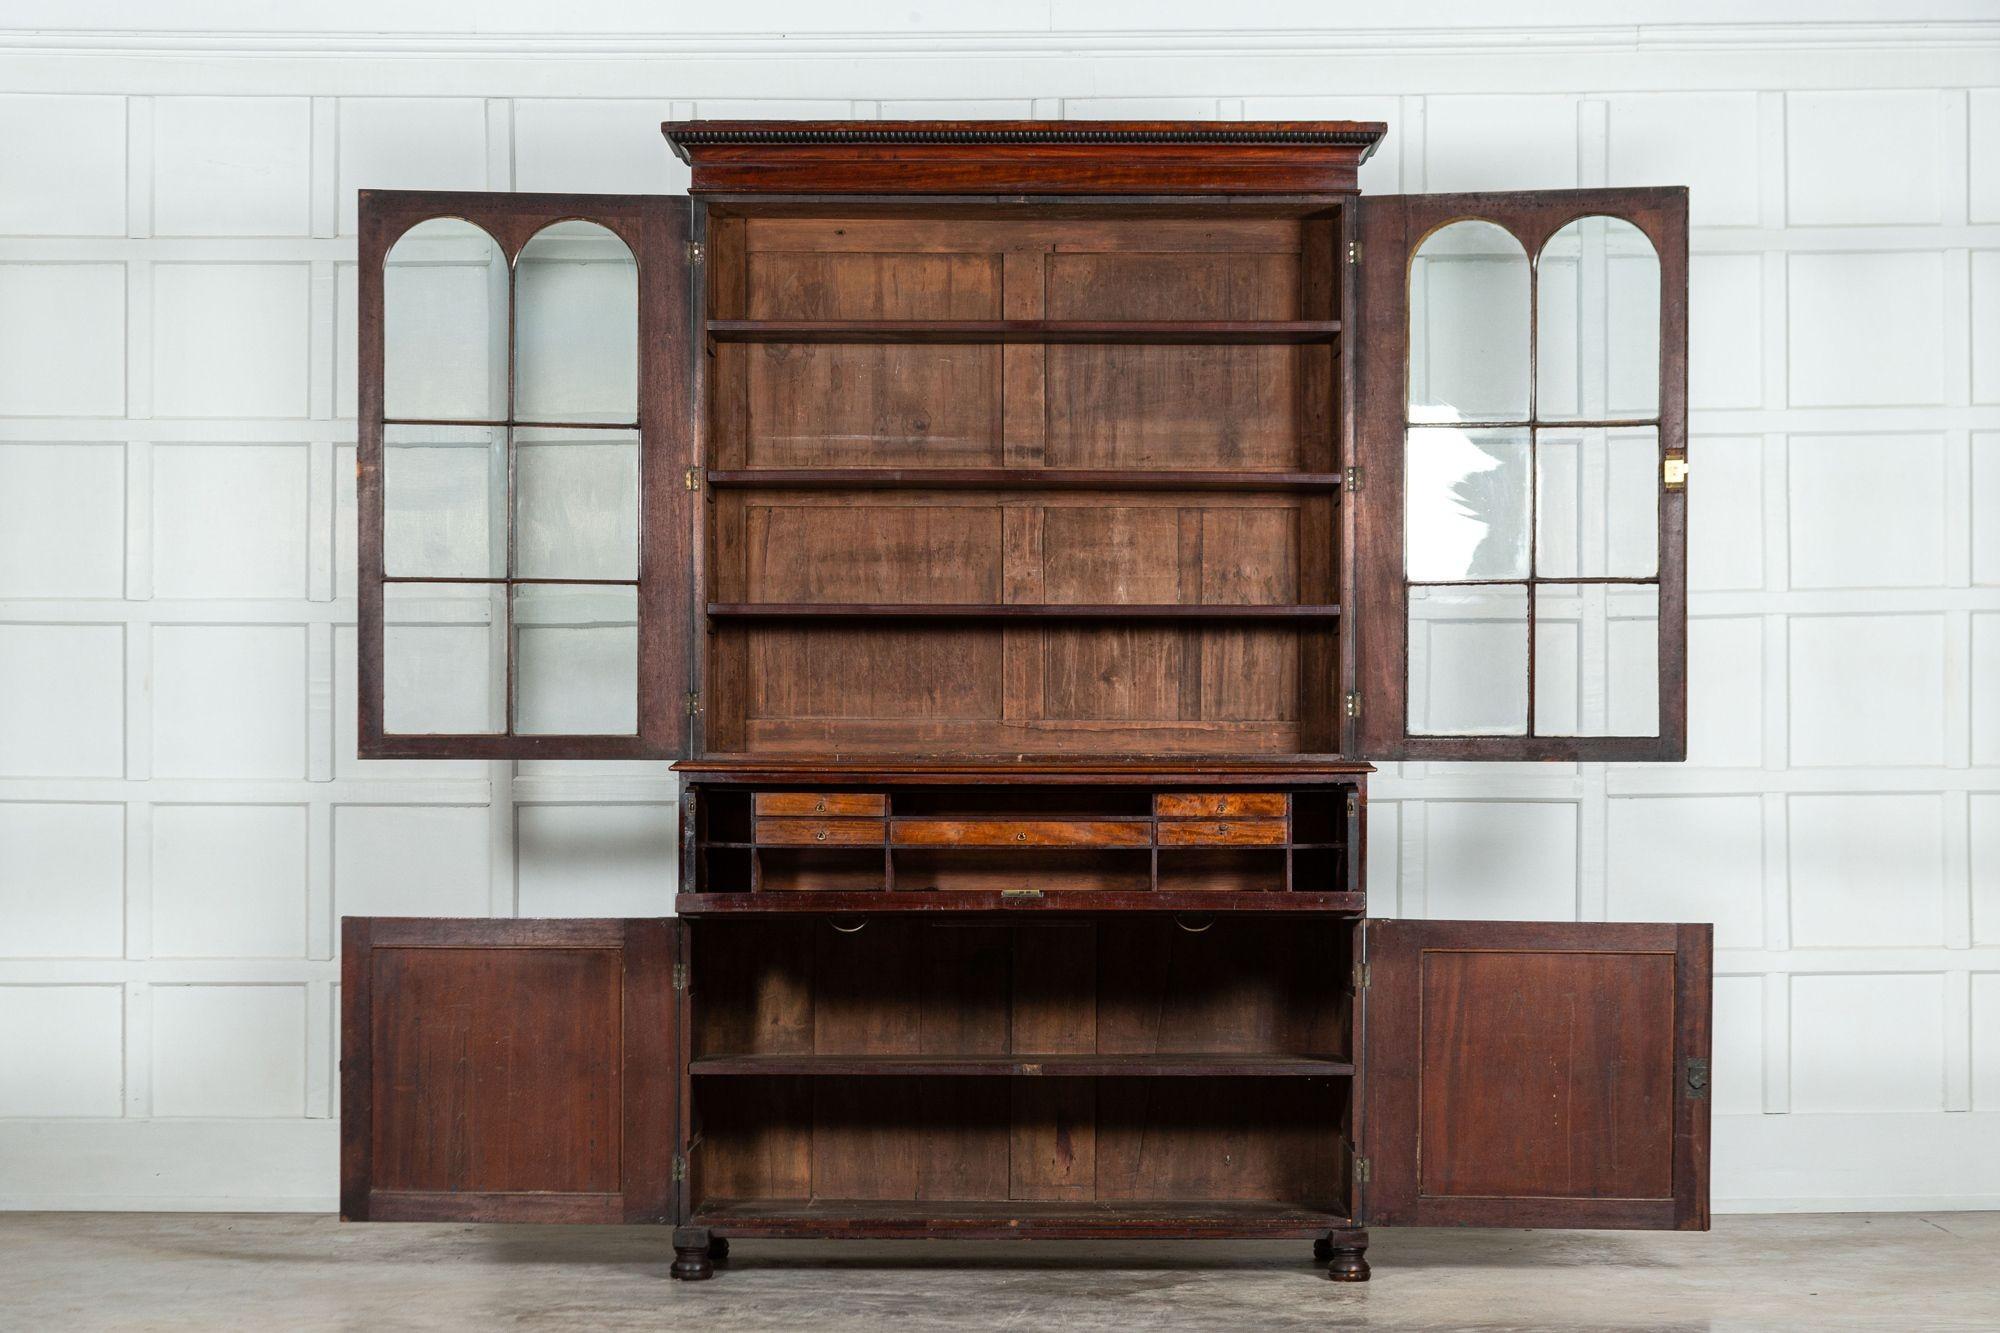 circa 1820
Large English Regency mahogany glazed secretaire bookcase
sku 1140
Together W142 x D52 x H226 cm
Base W137 x D52 x H101 cm
Top W142 x D40 x H125 cm.